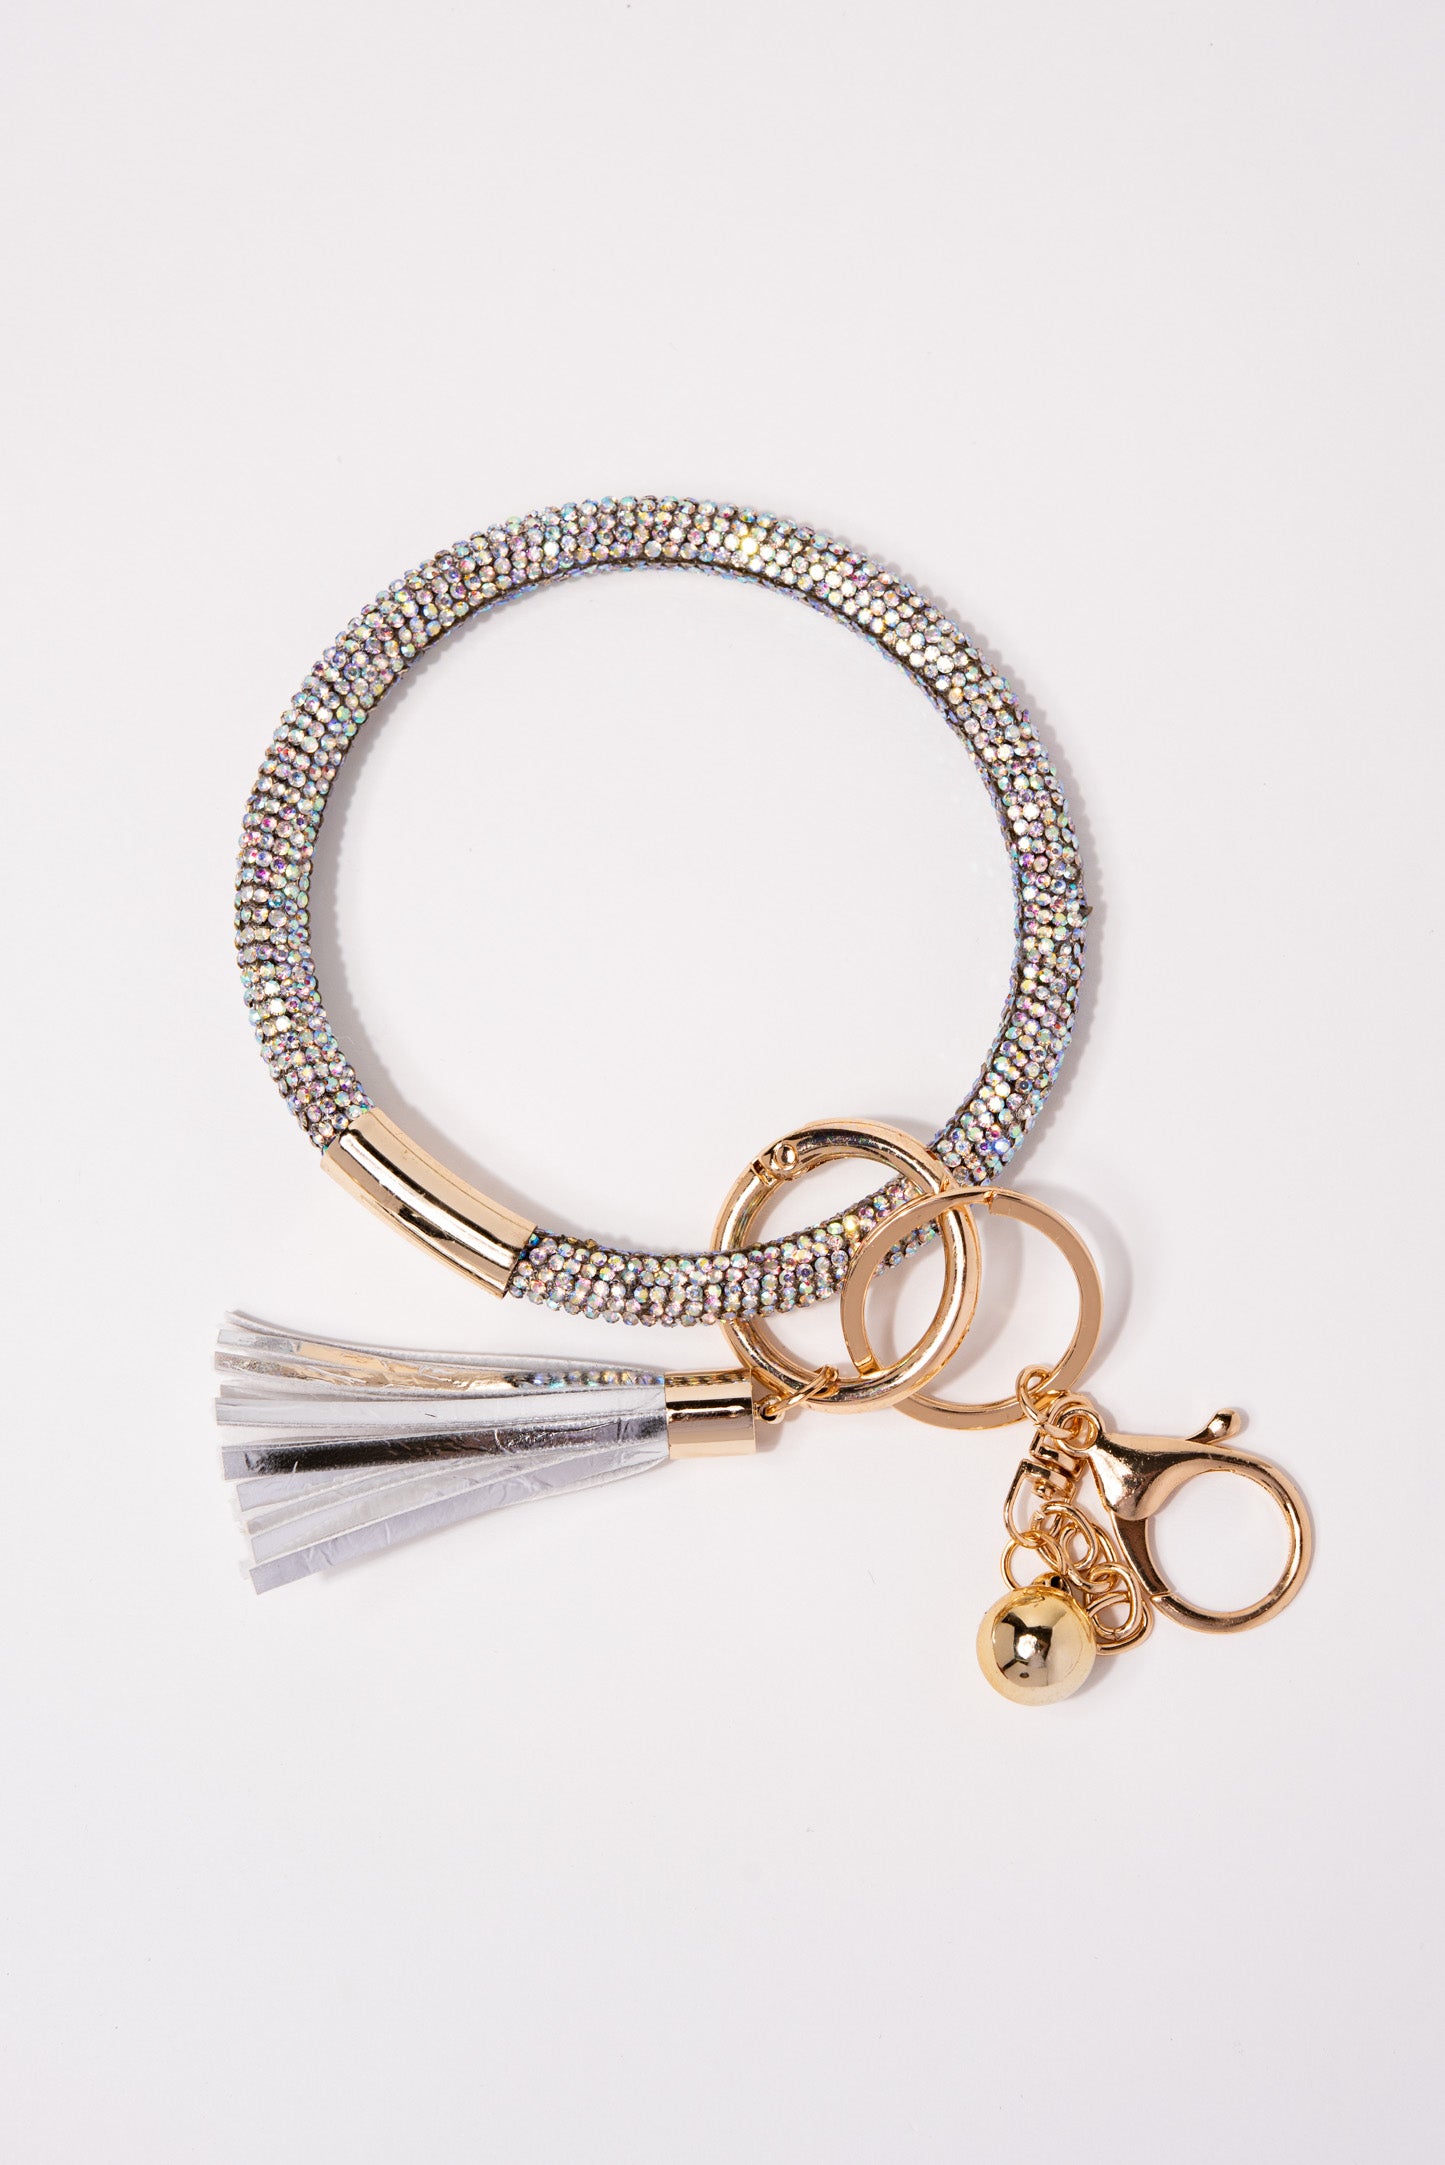 Sophia Collection Rhinestone Wristlet Keyring Keychain with Tassel- Iridescent